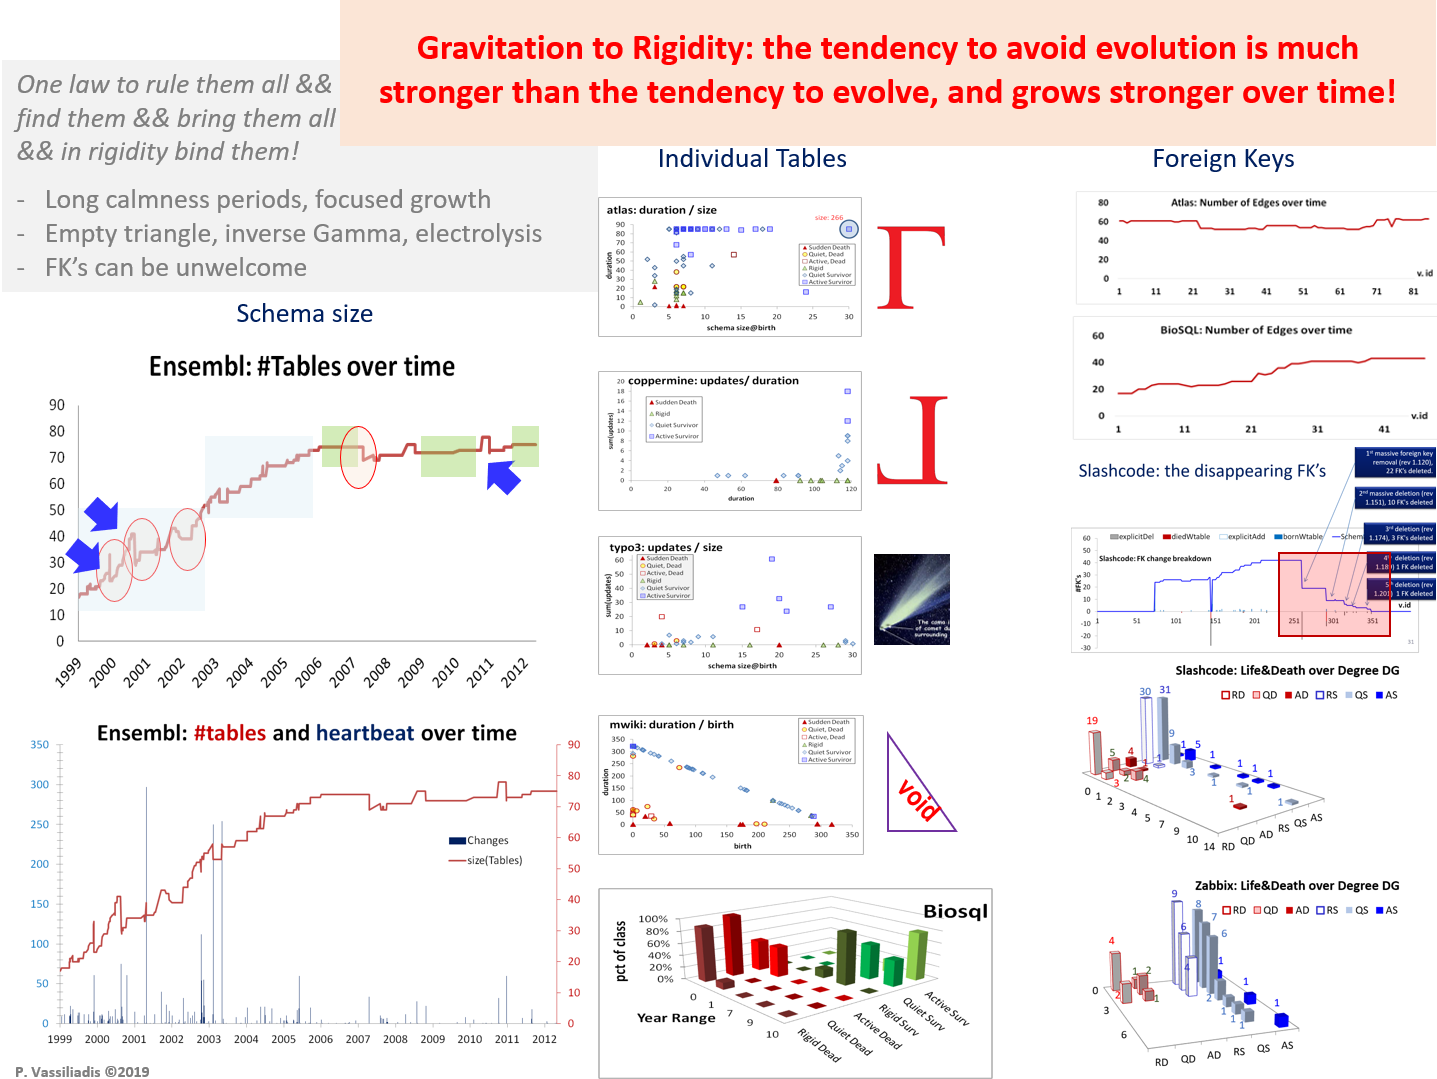 Schema Evolution: Gravitation to Rigidity is the fundamental law